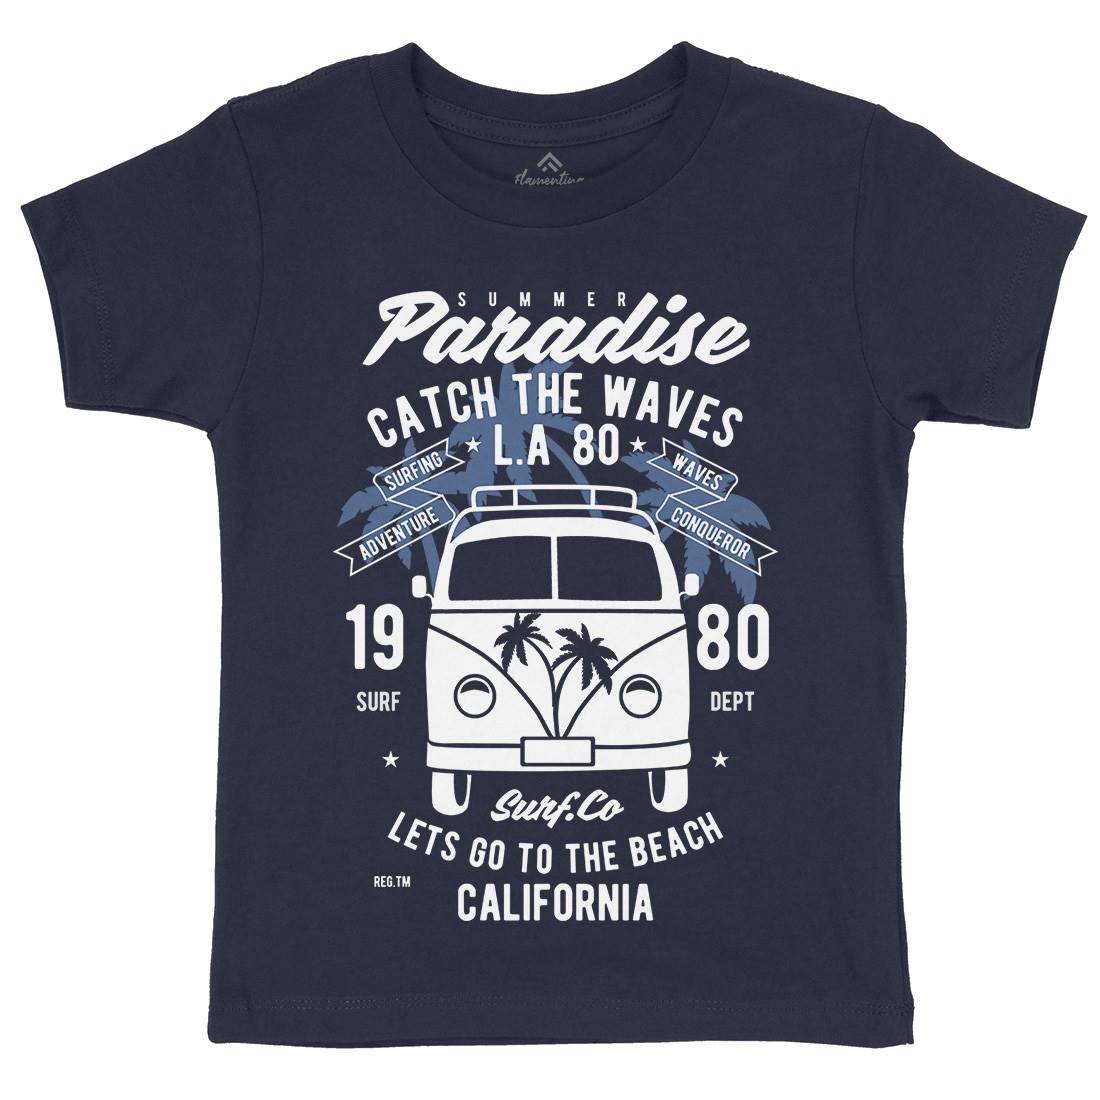 Catch The Waves Surfing Van Kids Organic Crew Neck T-Shirt Surf B393